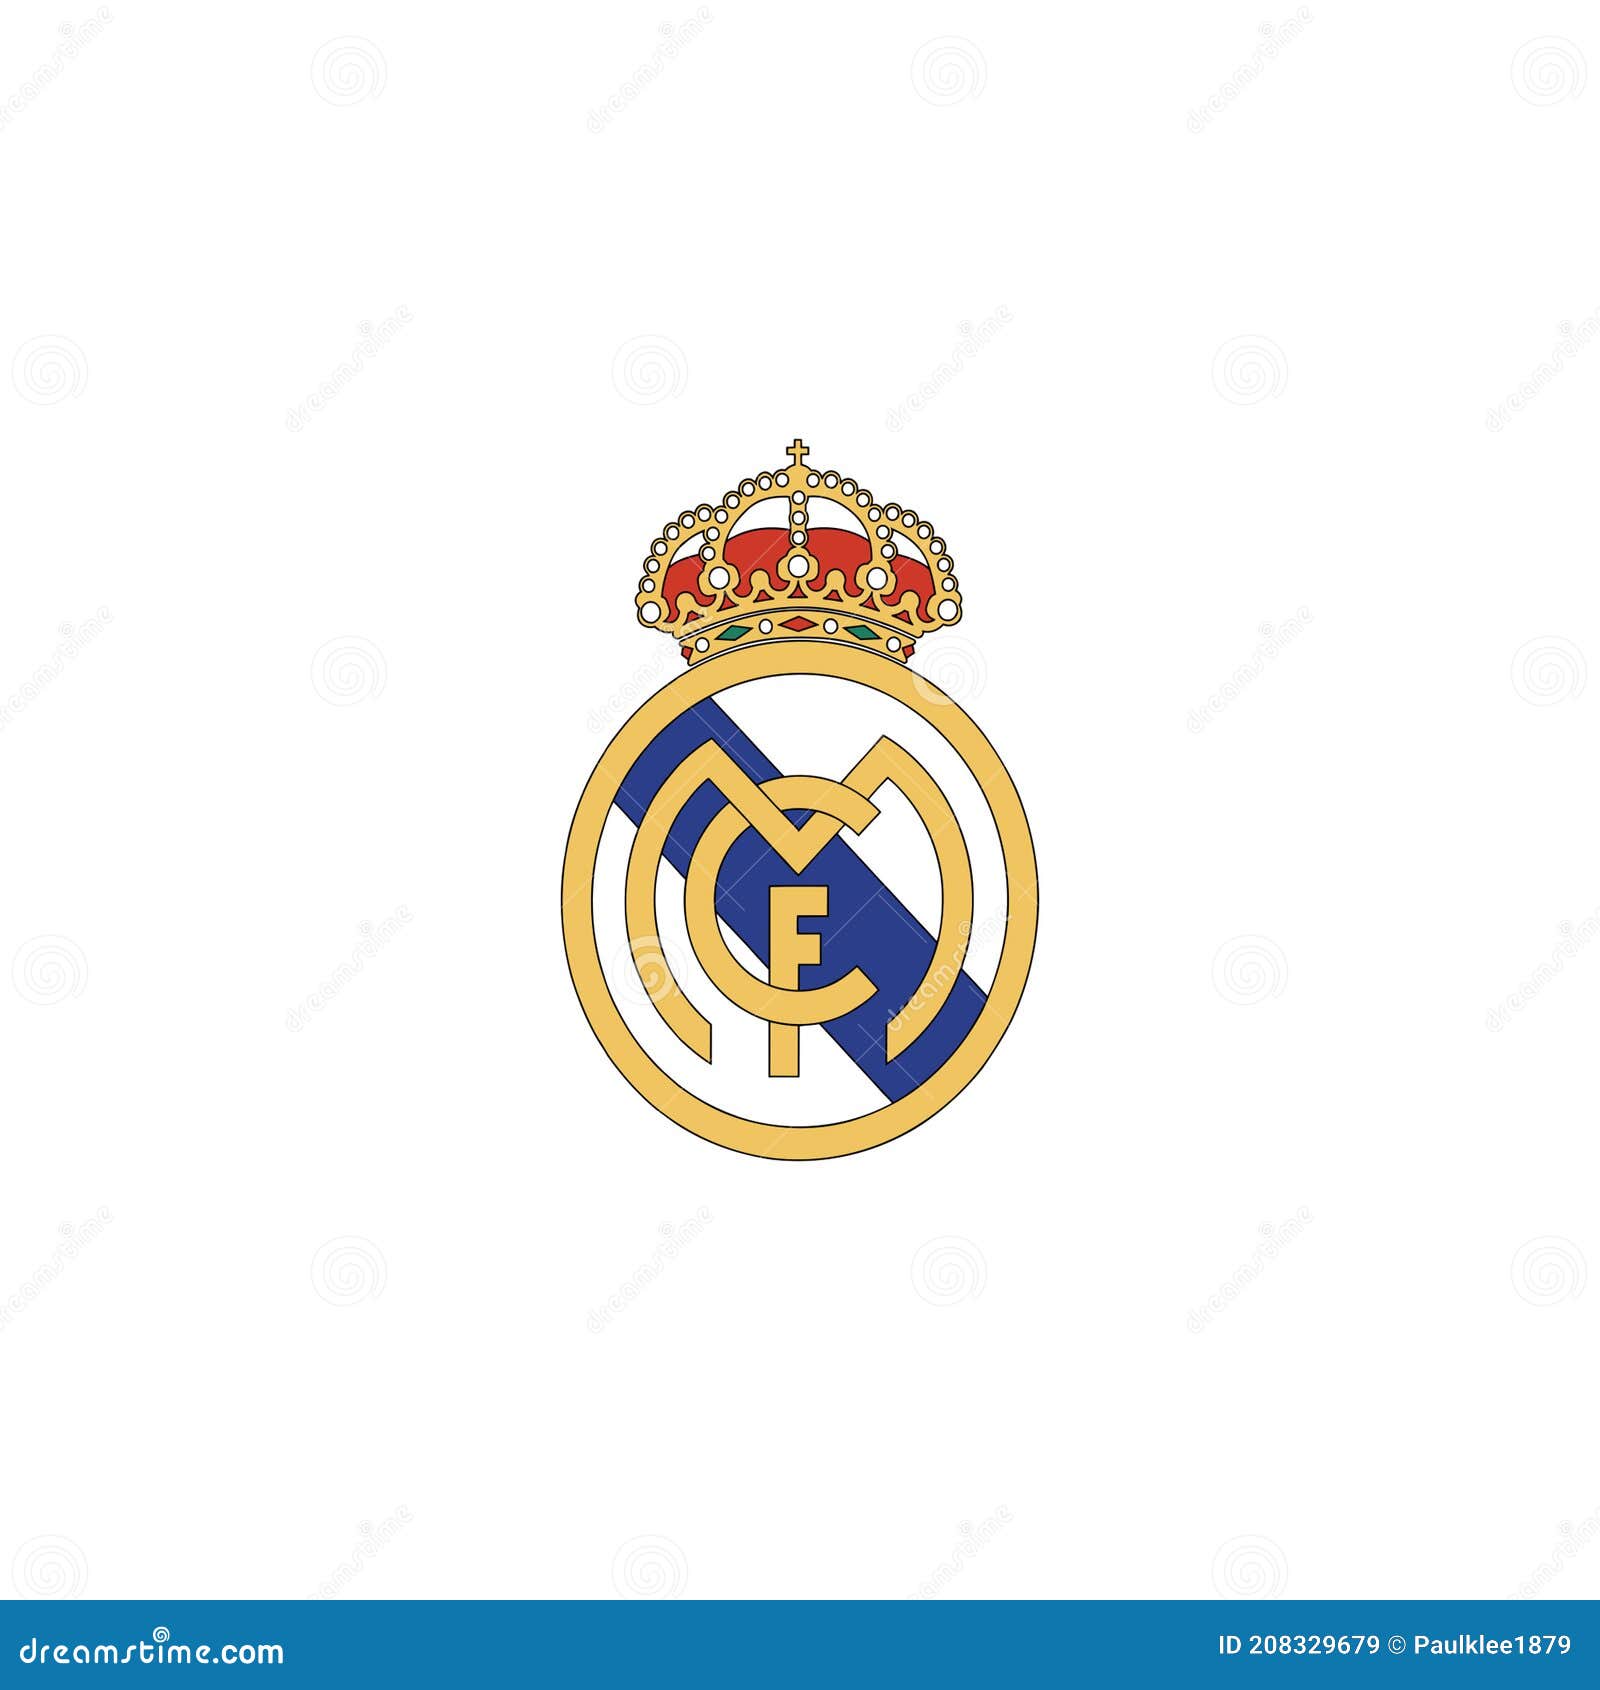 Real Madrid Iphone Wallpaper Discover more Adidas Desktop football Full  HD Iphone wallpapers  Fondos de pantalla real madrid Logotipo del real  madrid Madre